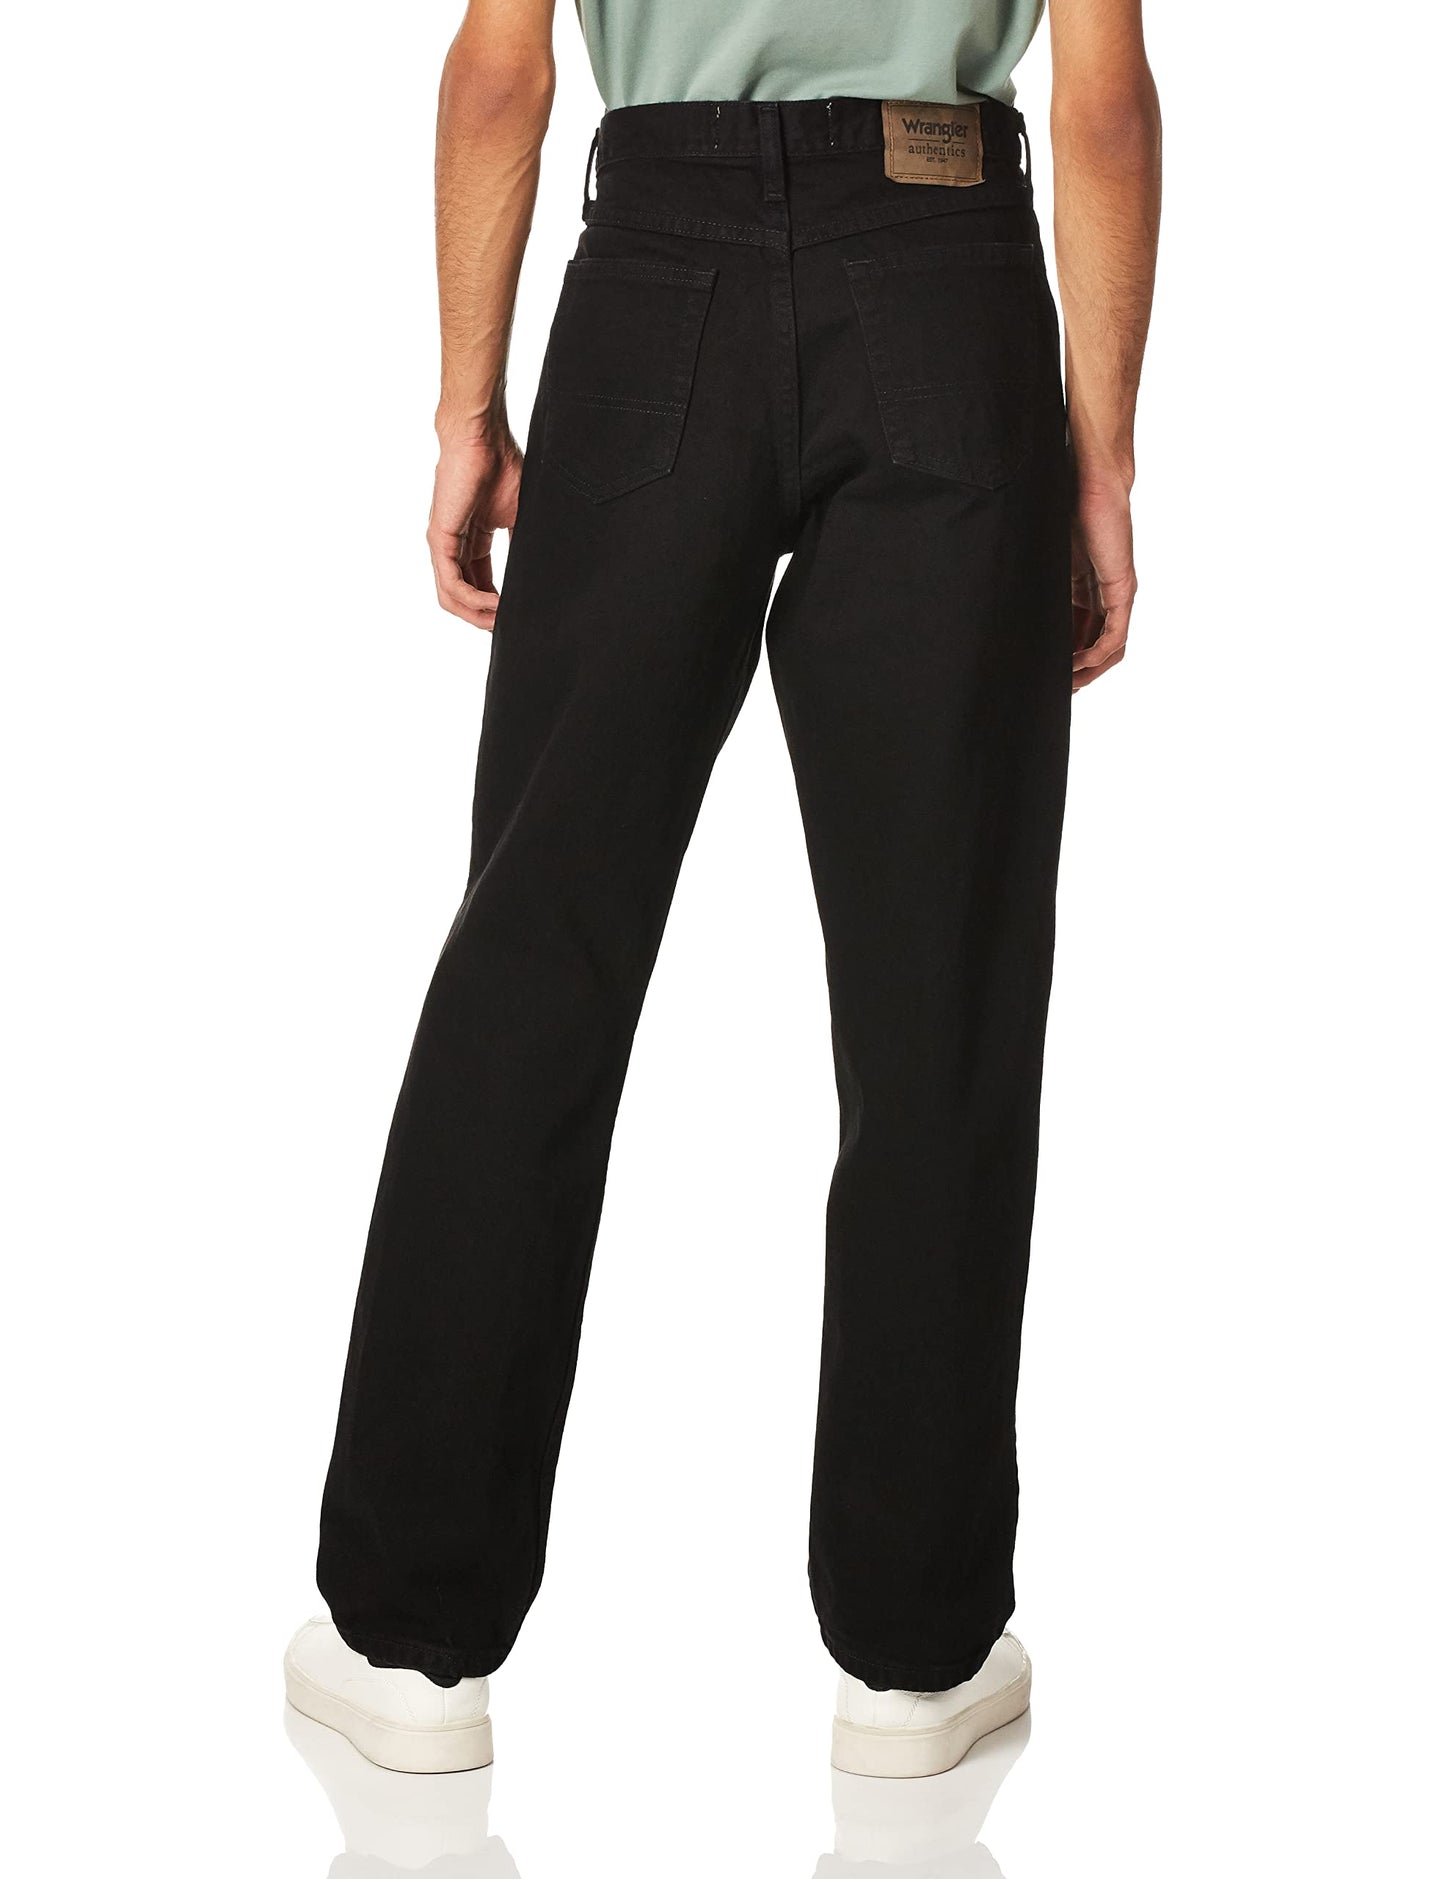 Wrangler Authentics Men's Big & Tall Classic 5-Pocket Relaxed Fit Cotton Jean, Black, 48W x 32L